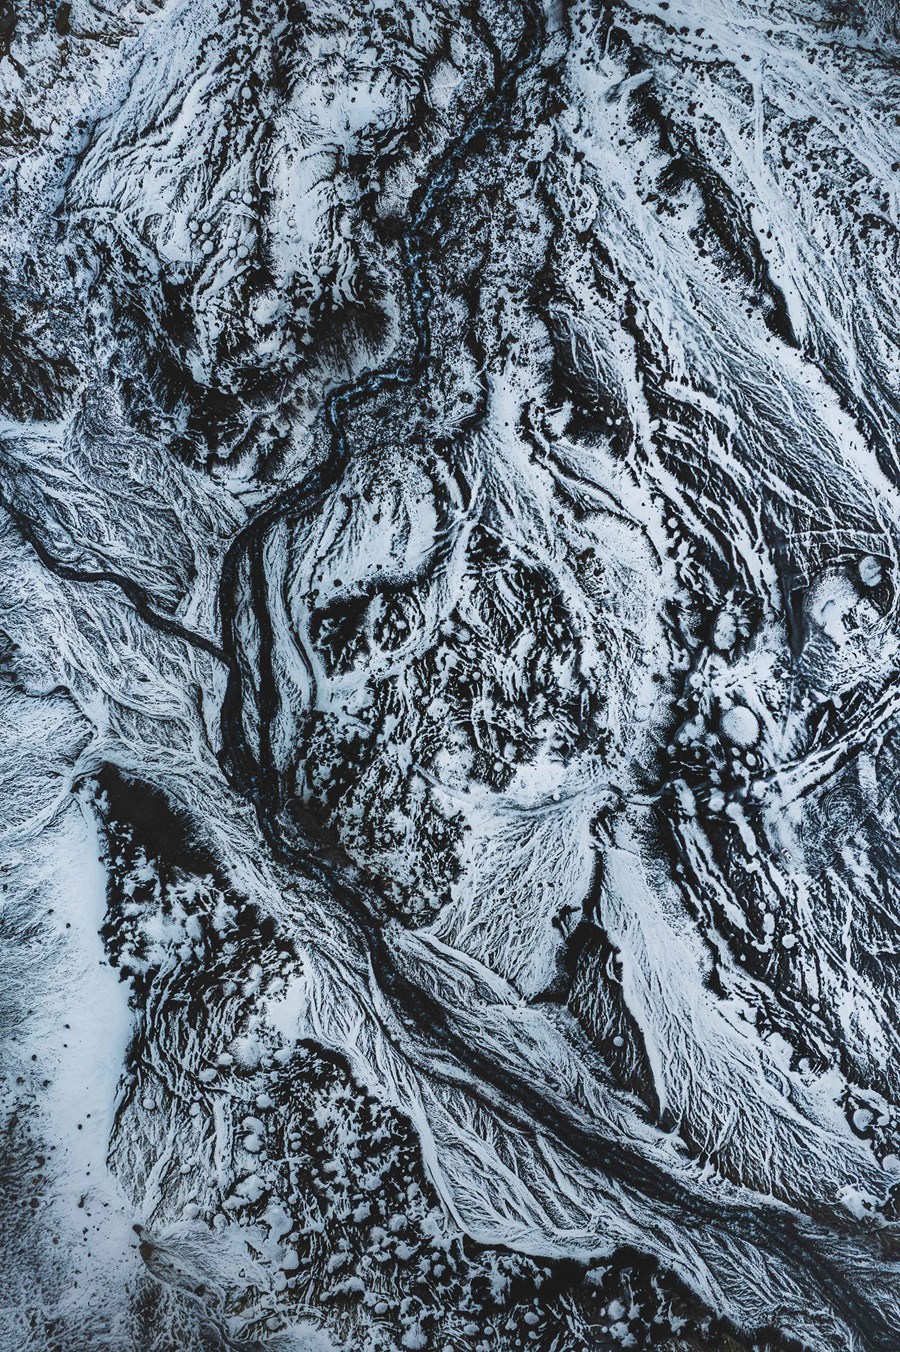 Frozen Poetry - Ljóðrænt frost